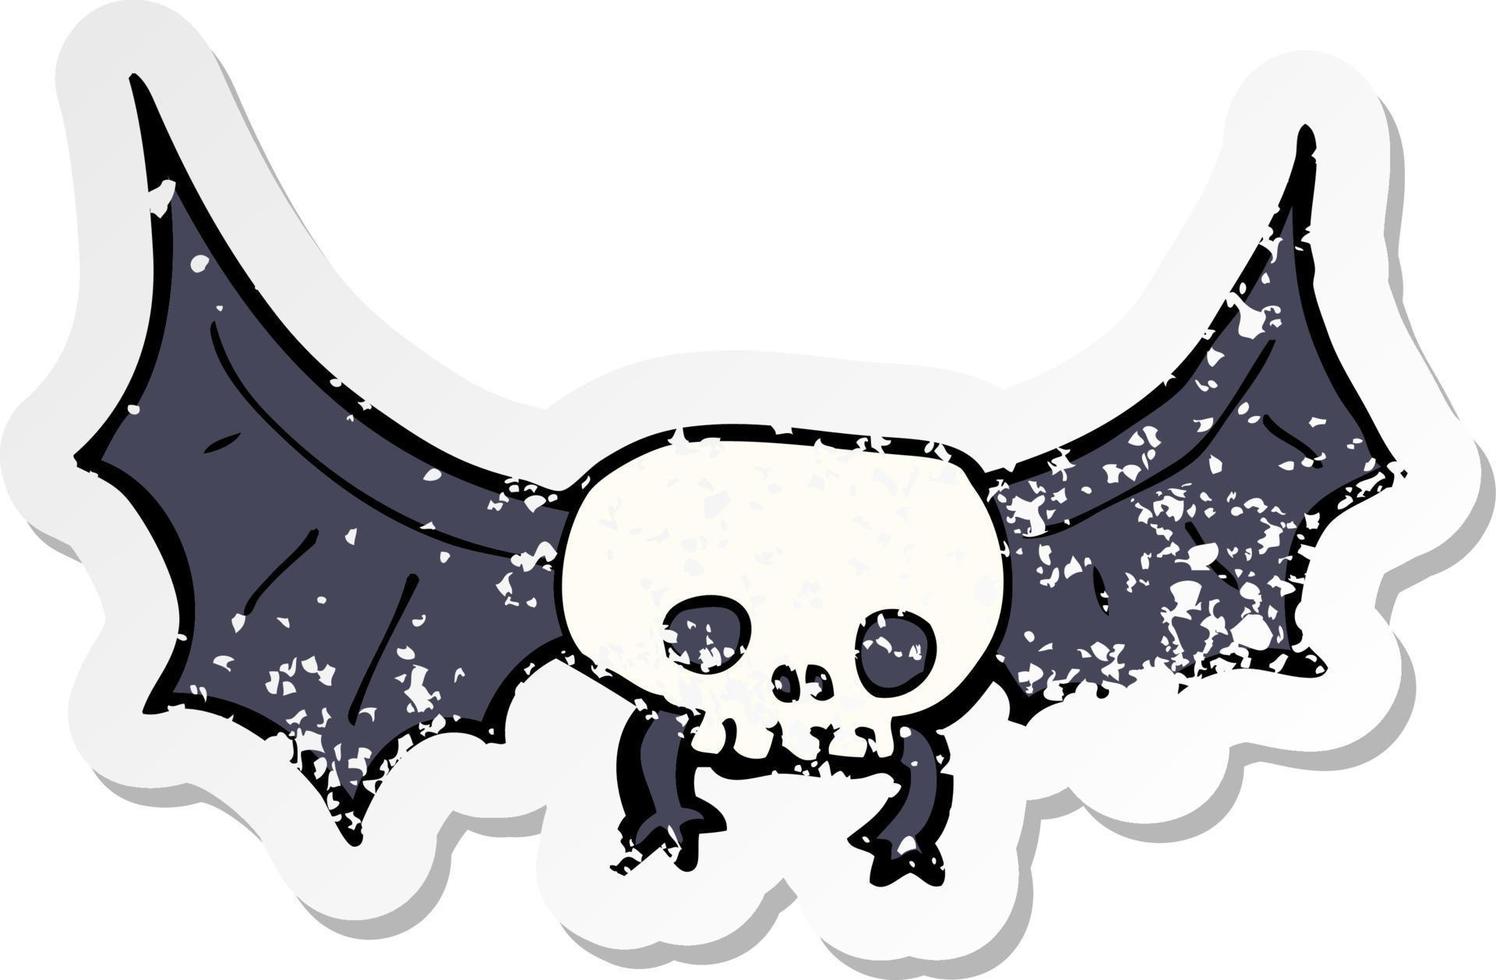 pegatina retro angustiada de un murciélago de calavera espeluznante de dibujos animados vector